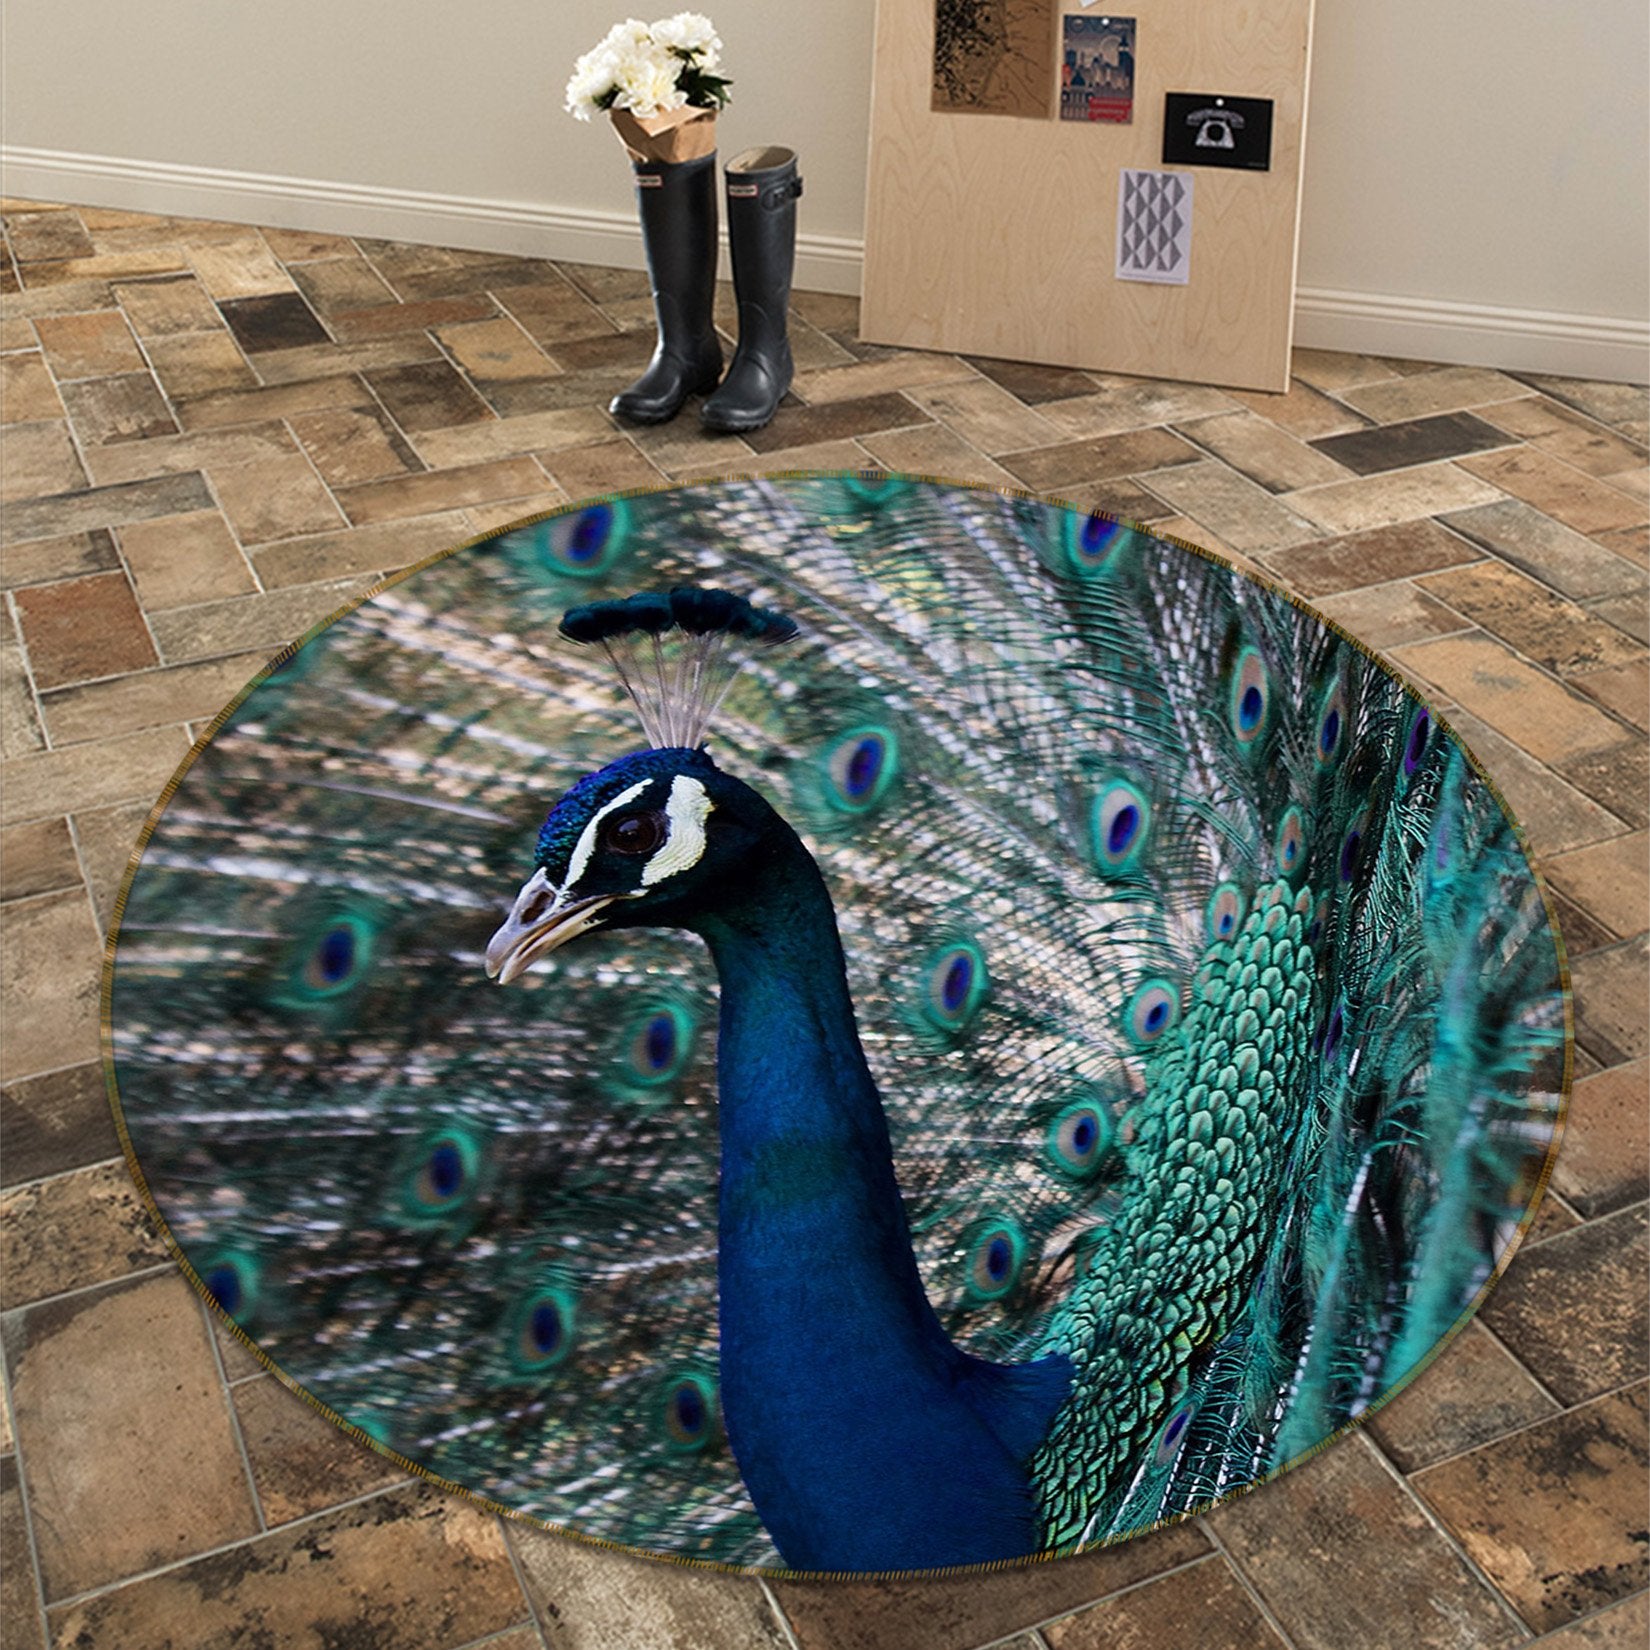 3D Peacock Opening 083 Animal Round Non Slip Rug Mat Mat AJ Creativity Home 